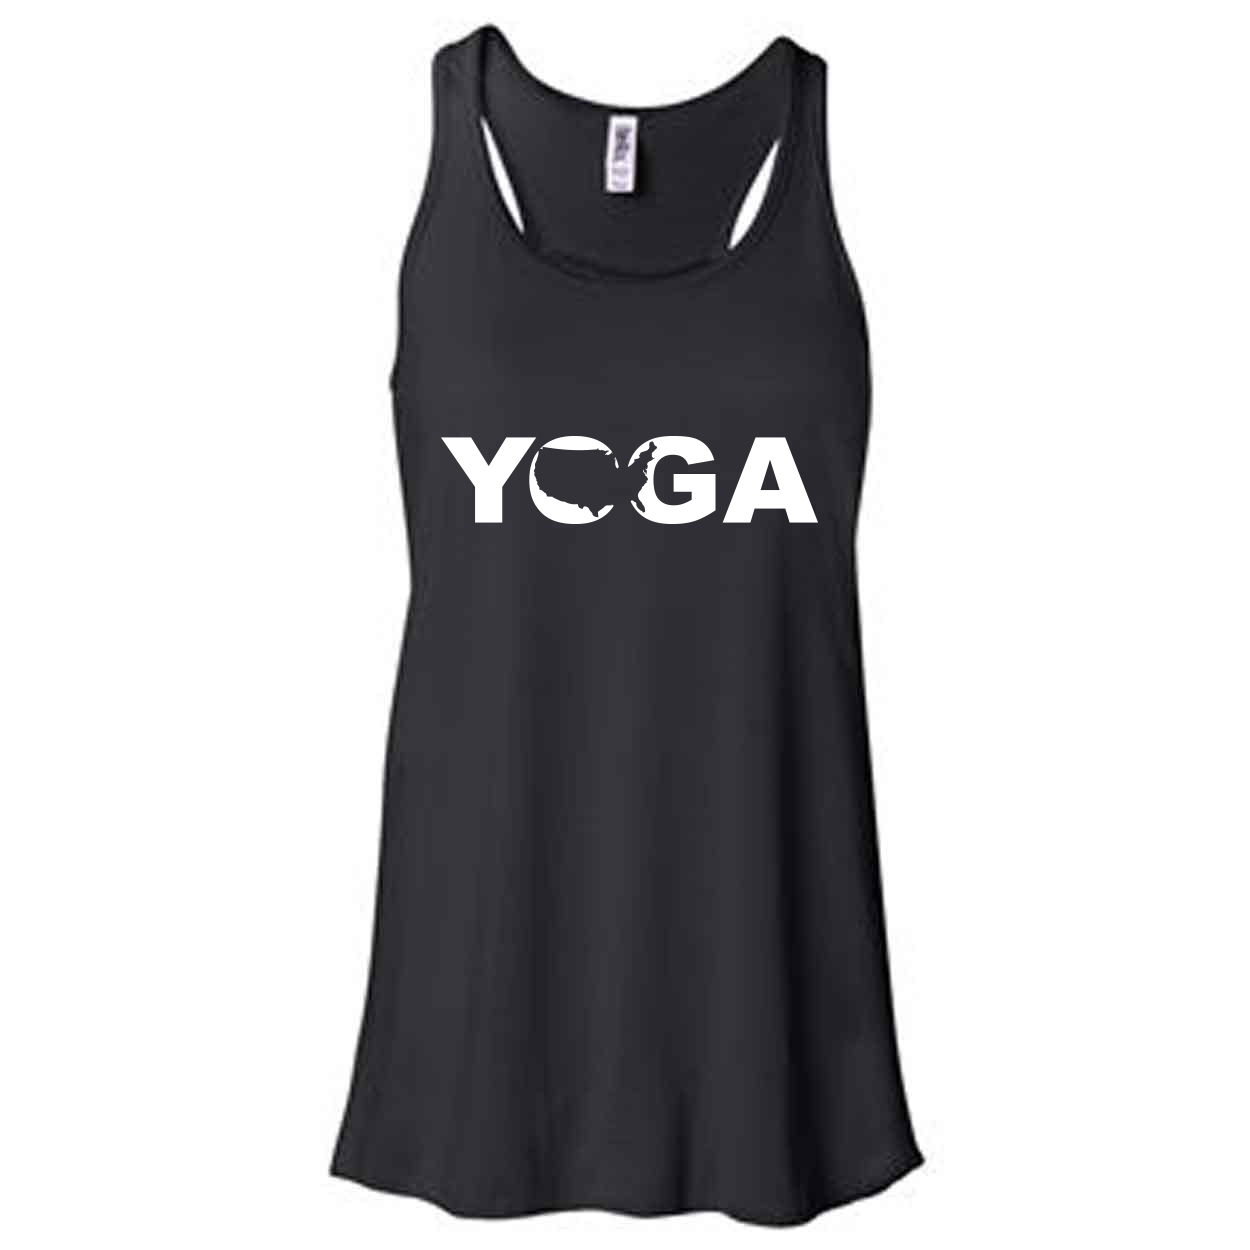 Yoga United States Classic Women's Flowy Racerback Tank Top Black (White Logo)